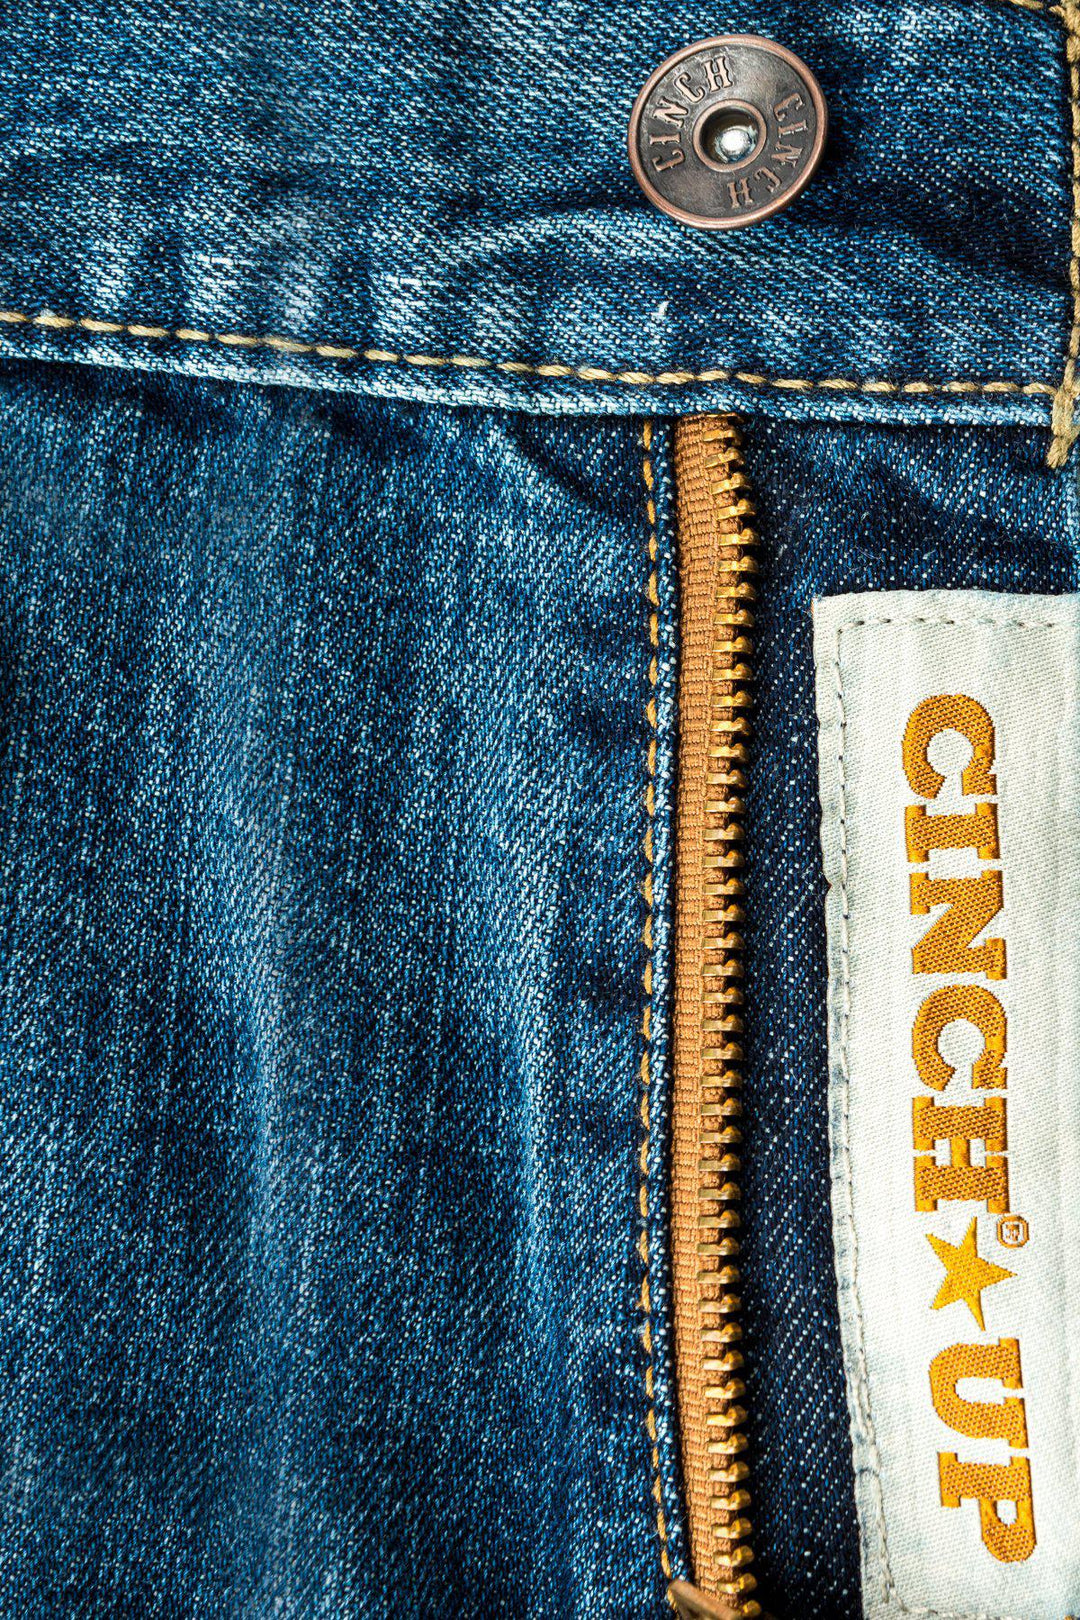 Cinch Men's Relaxed Fit Carter Jeans - Lazy J Ranch Wear